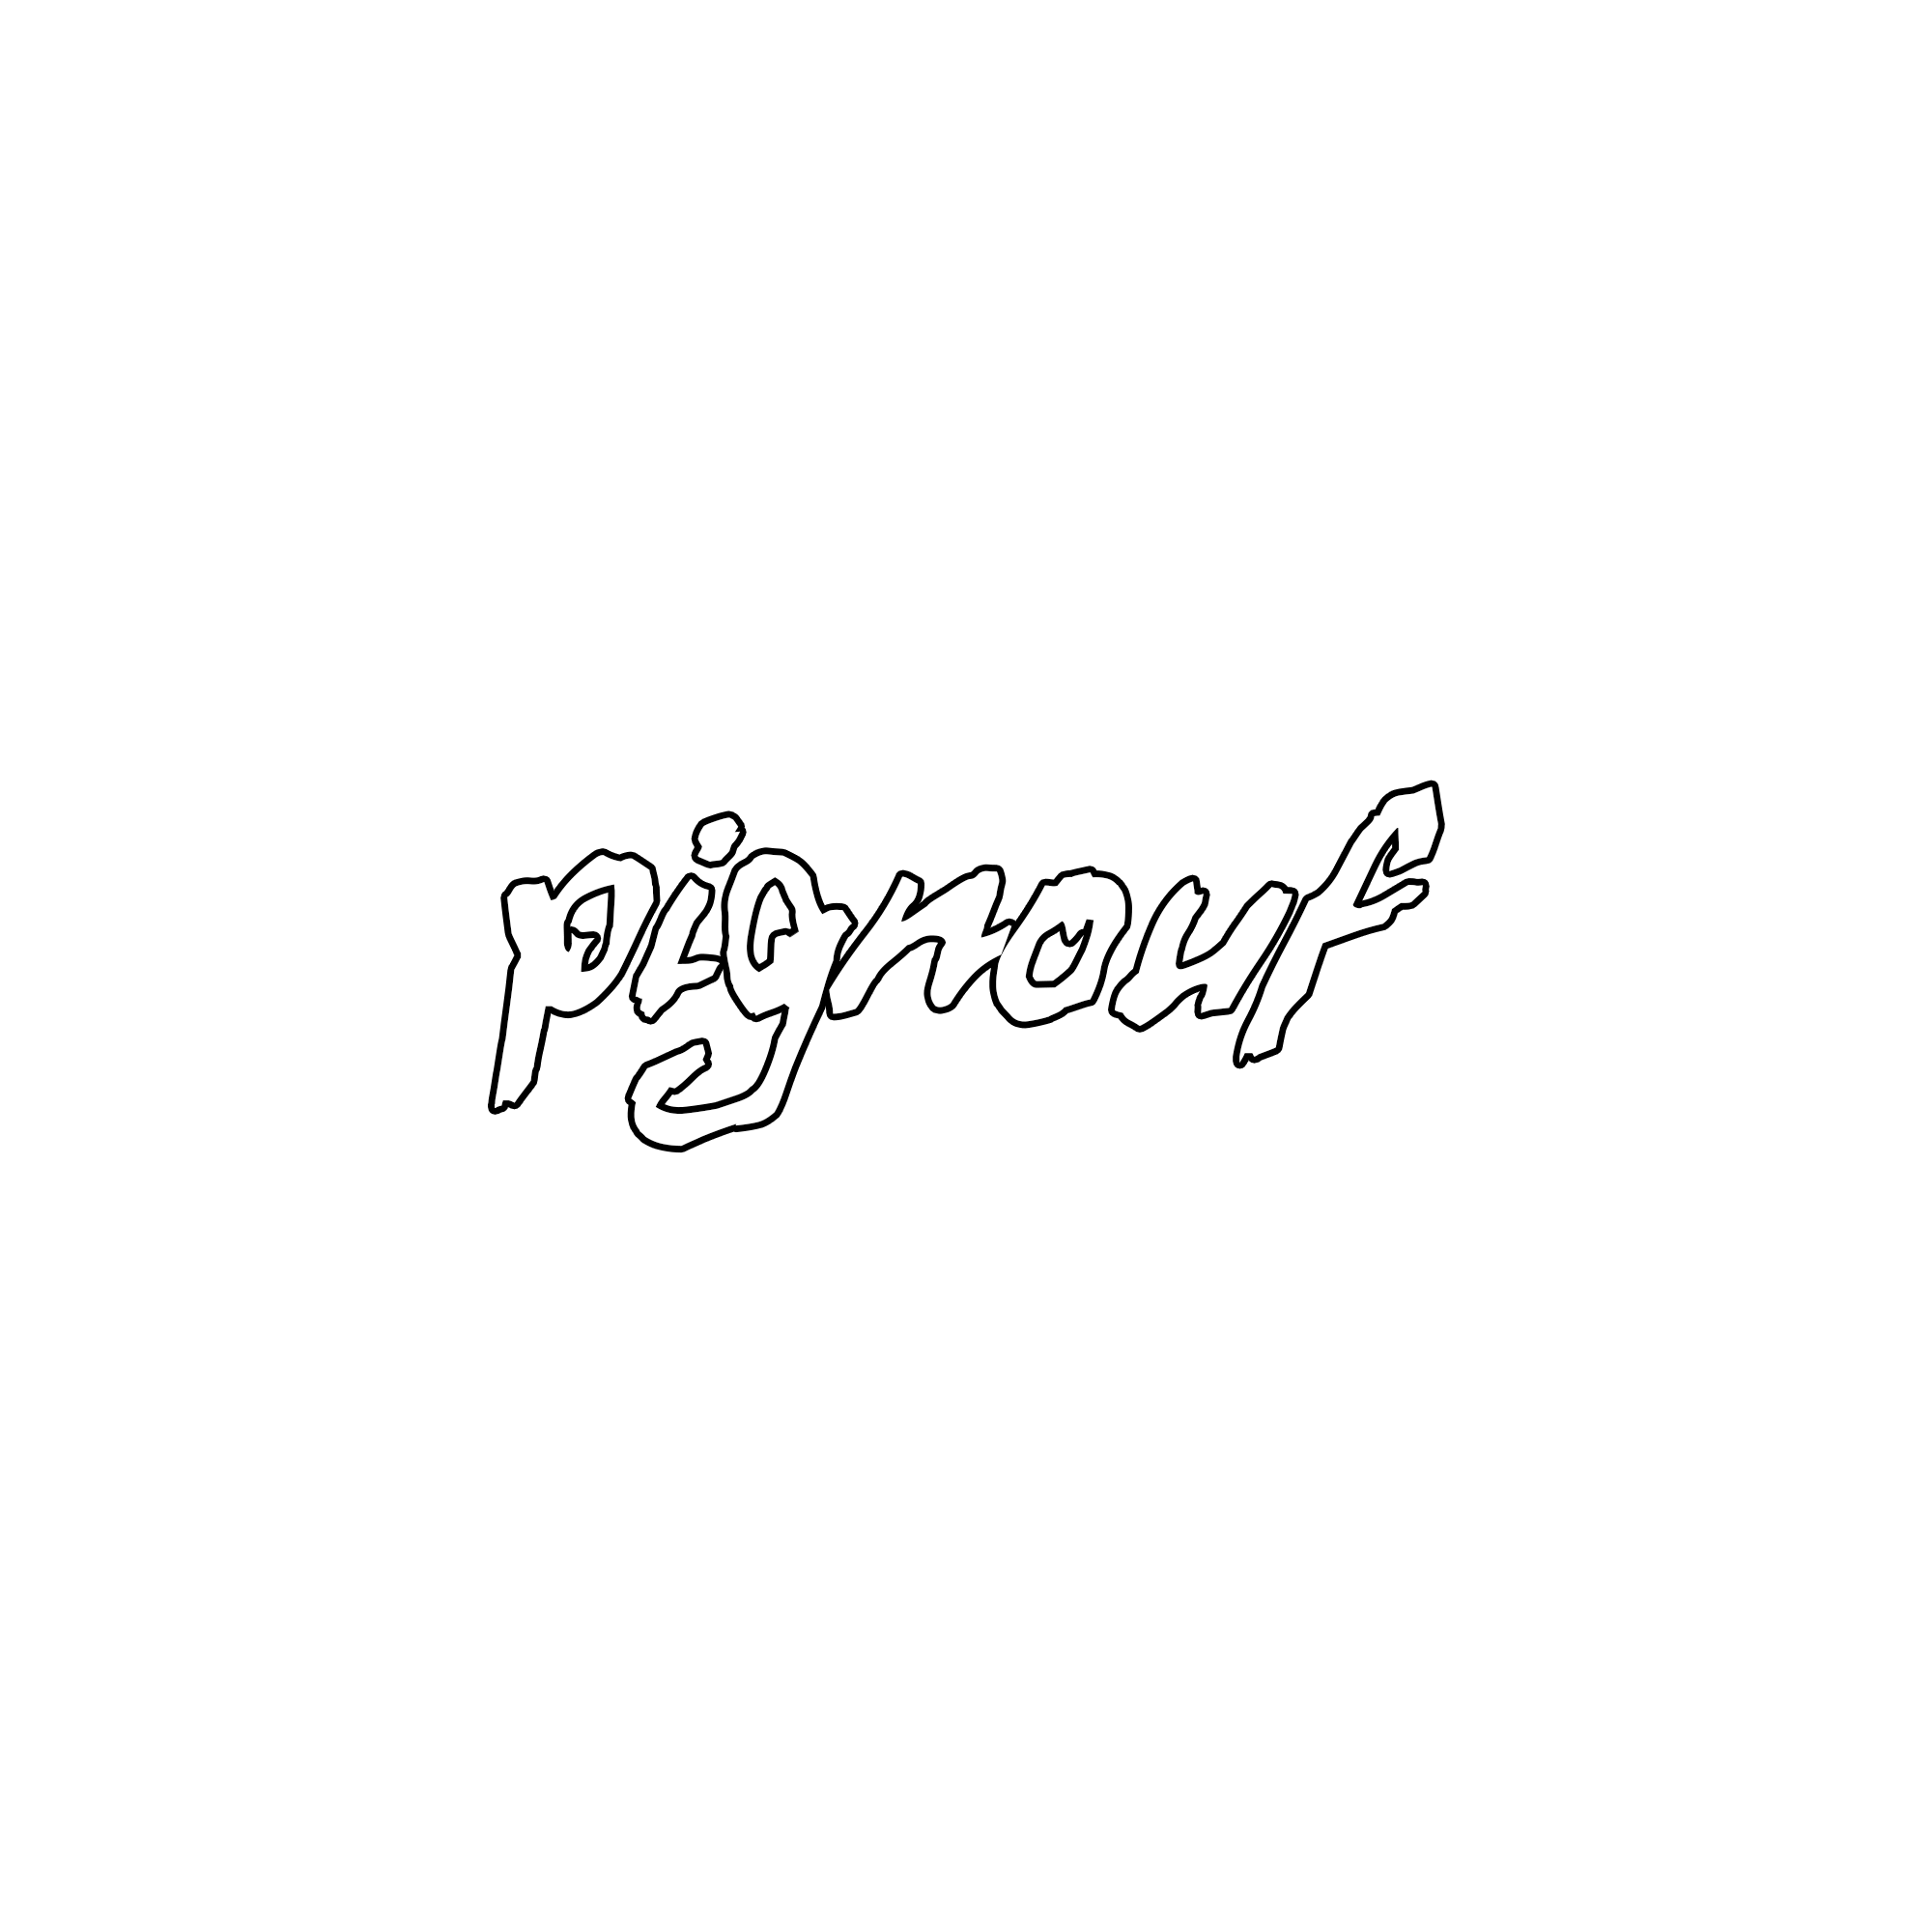 PIGNOUF's logo